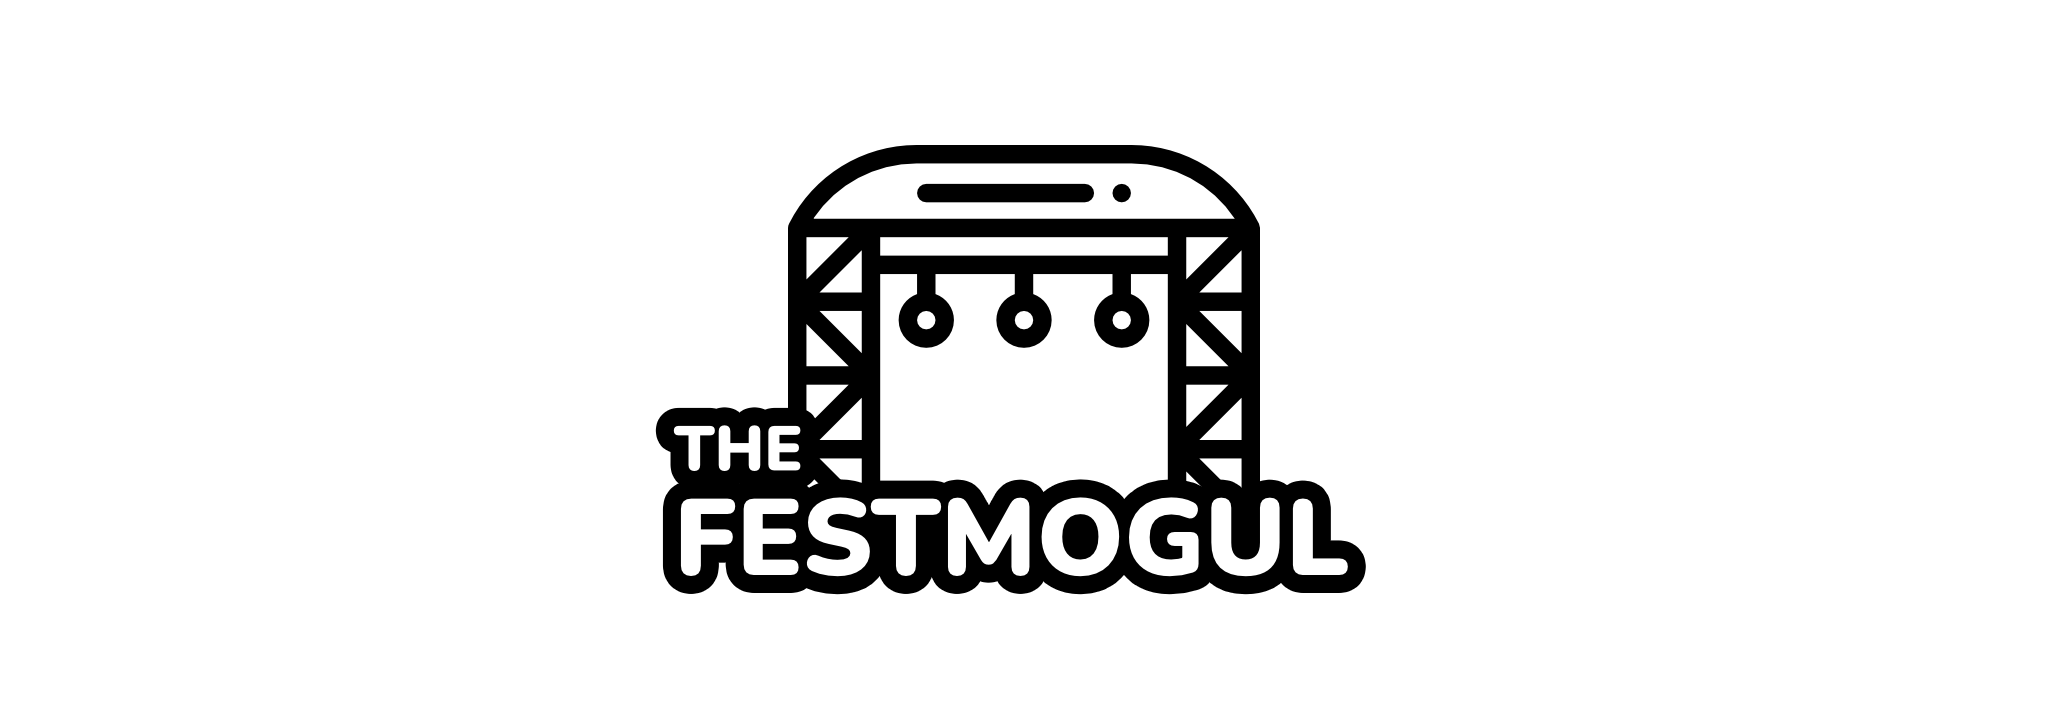 The Festmogul